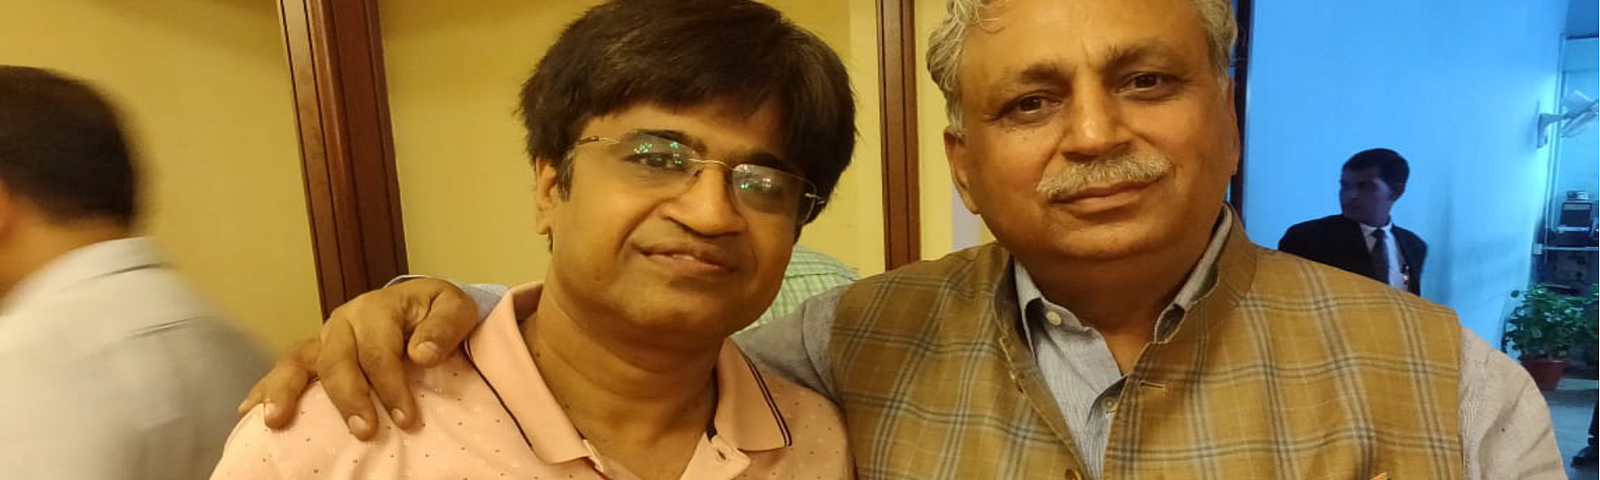 Anand damani with C.P. Gurnani- Tech Mahindra on Anti-Globalisation